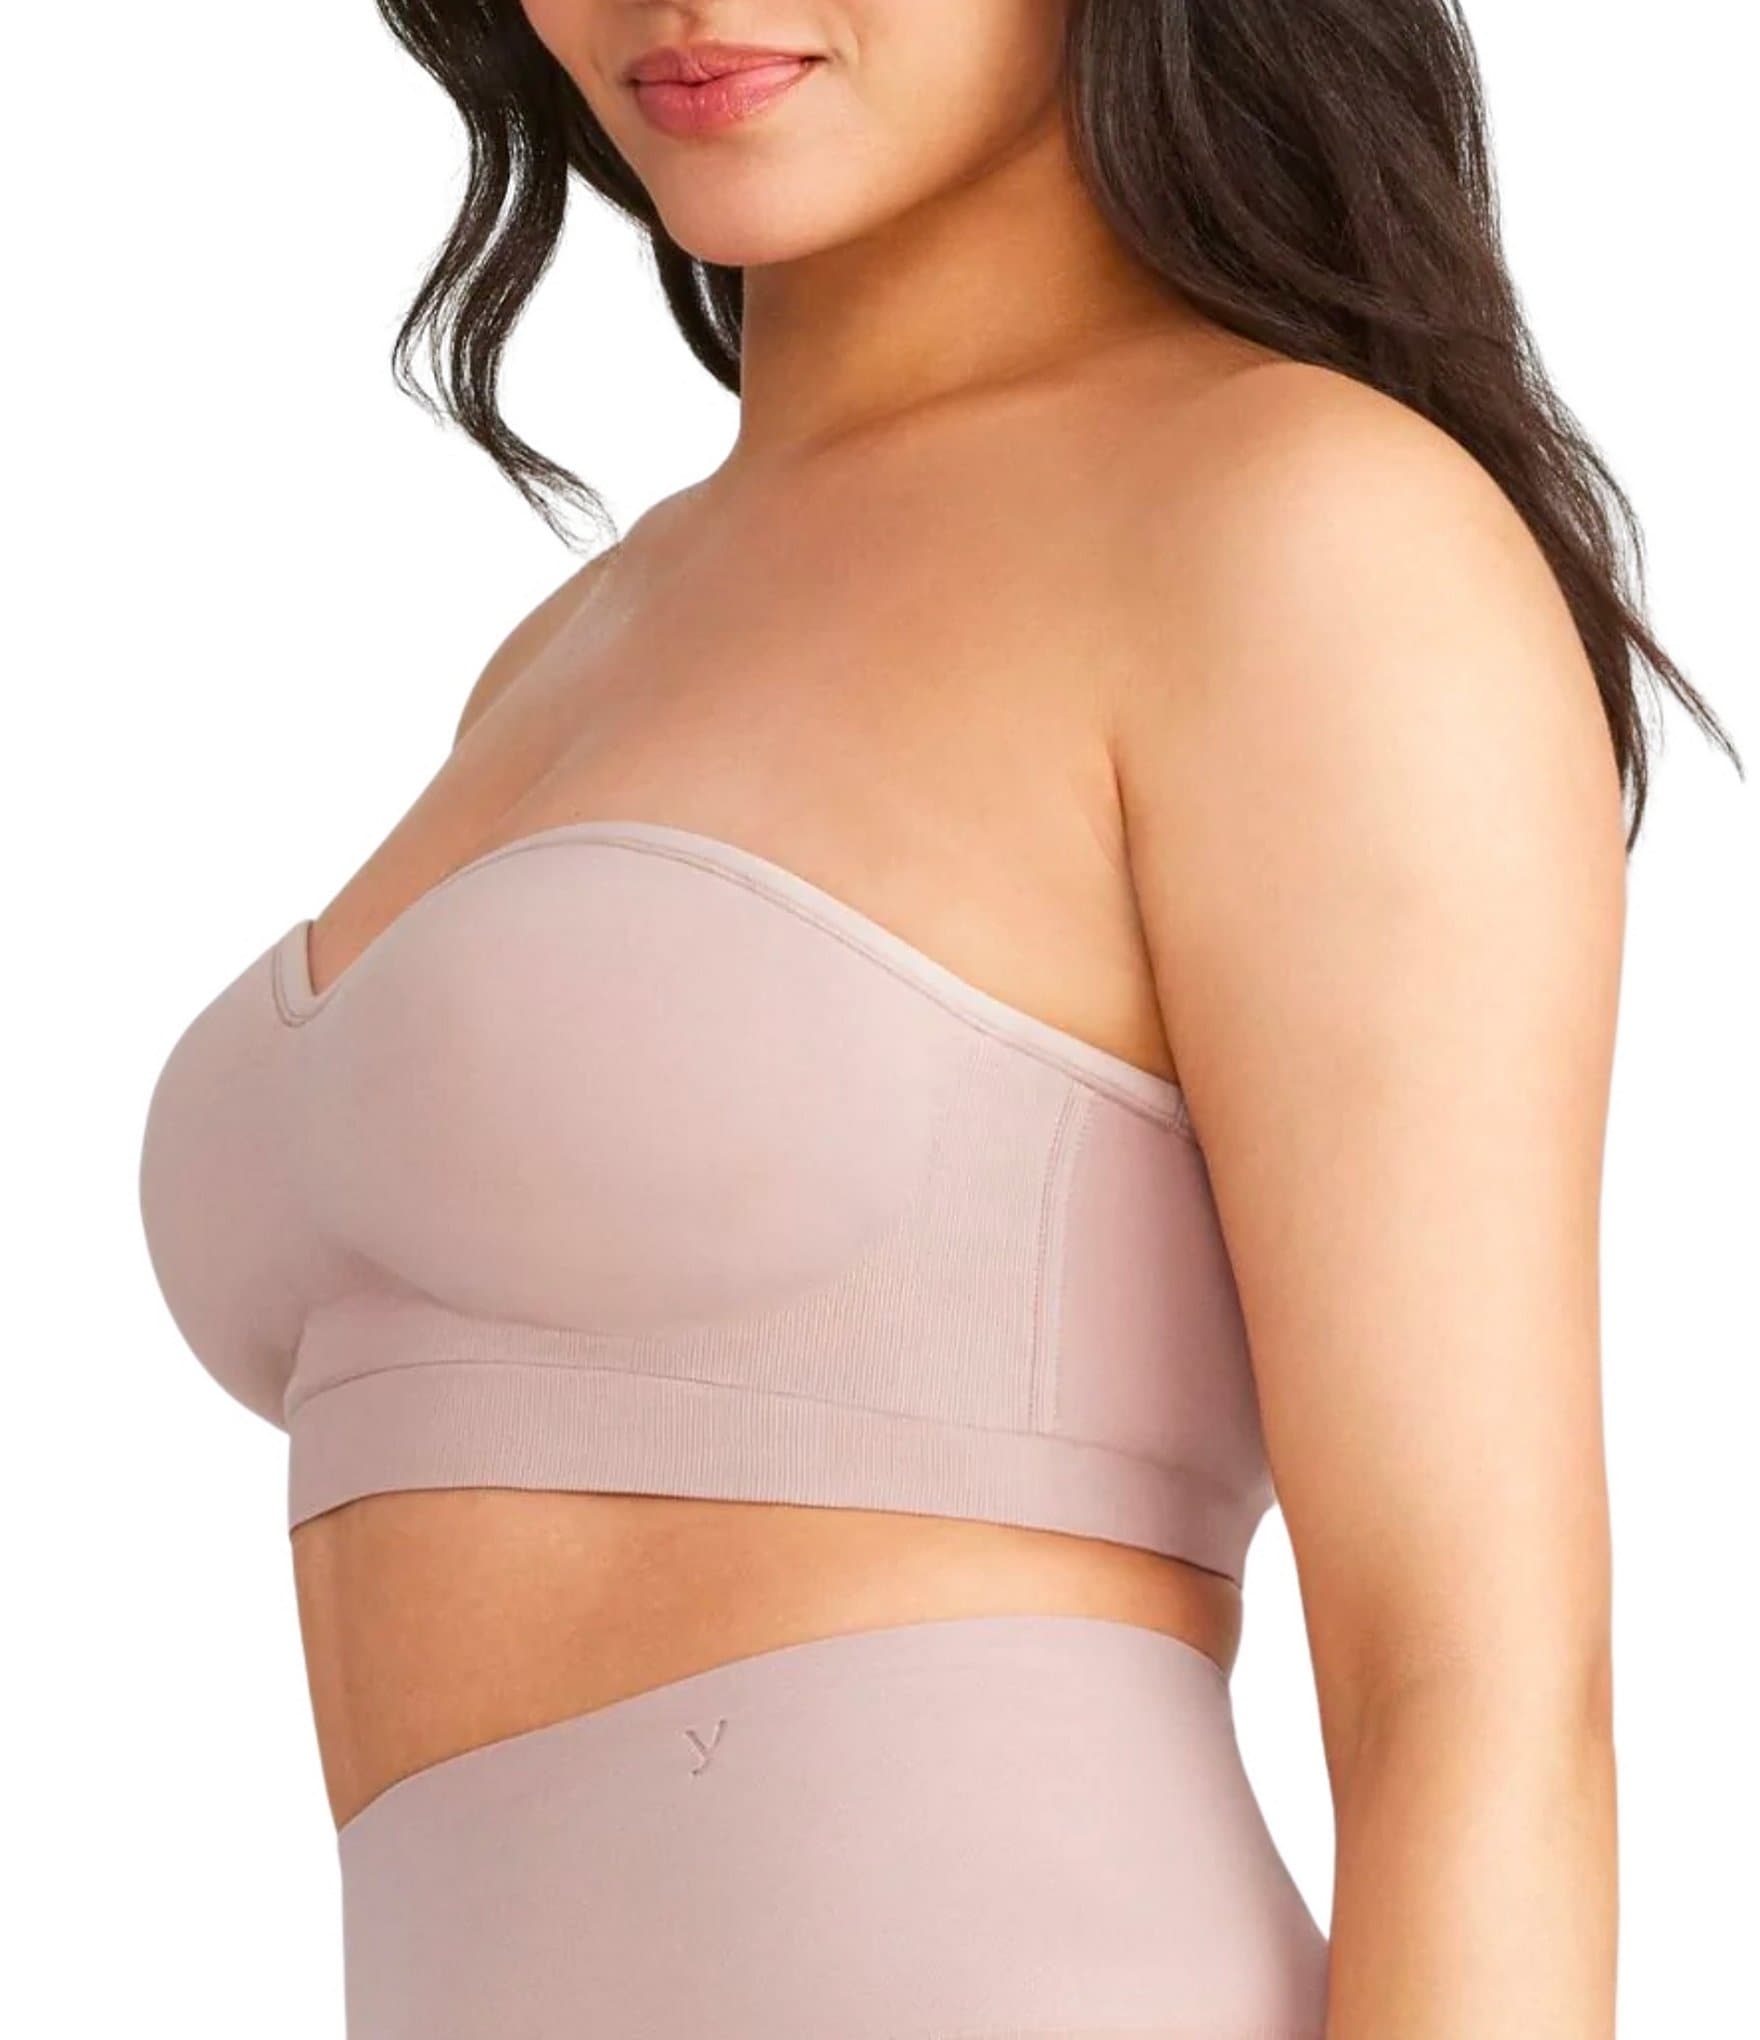 bra cloth: Women's Strapless Bras